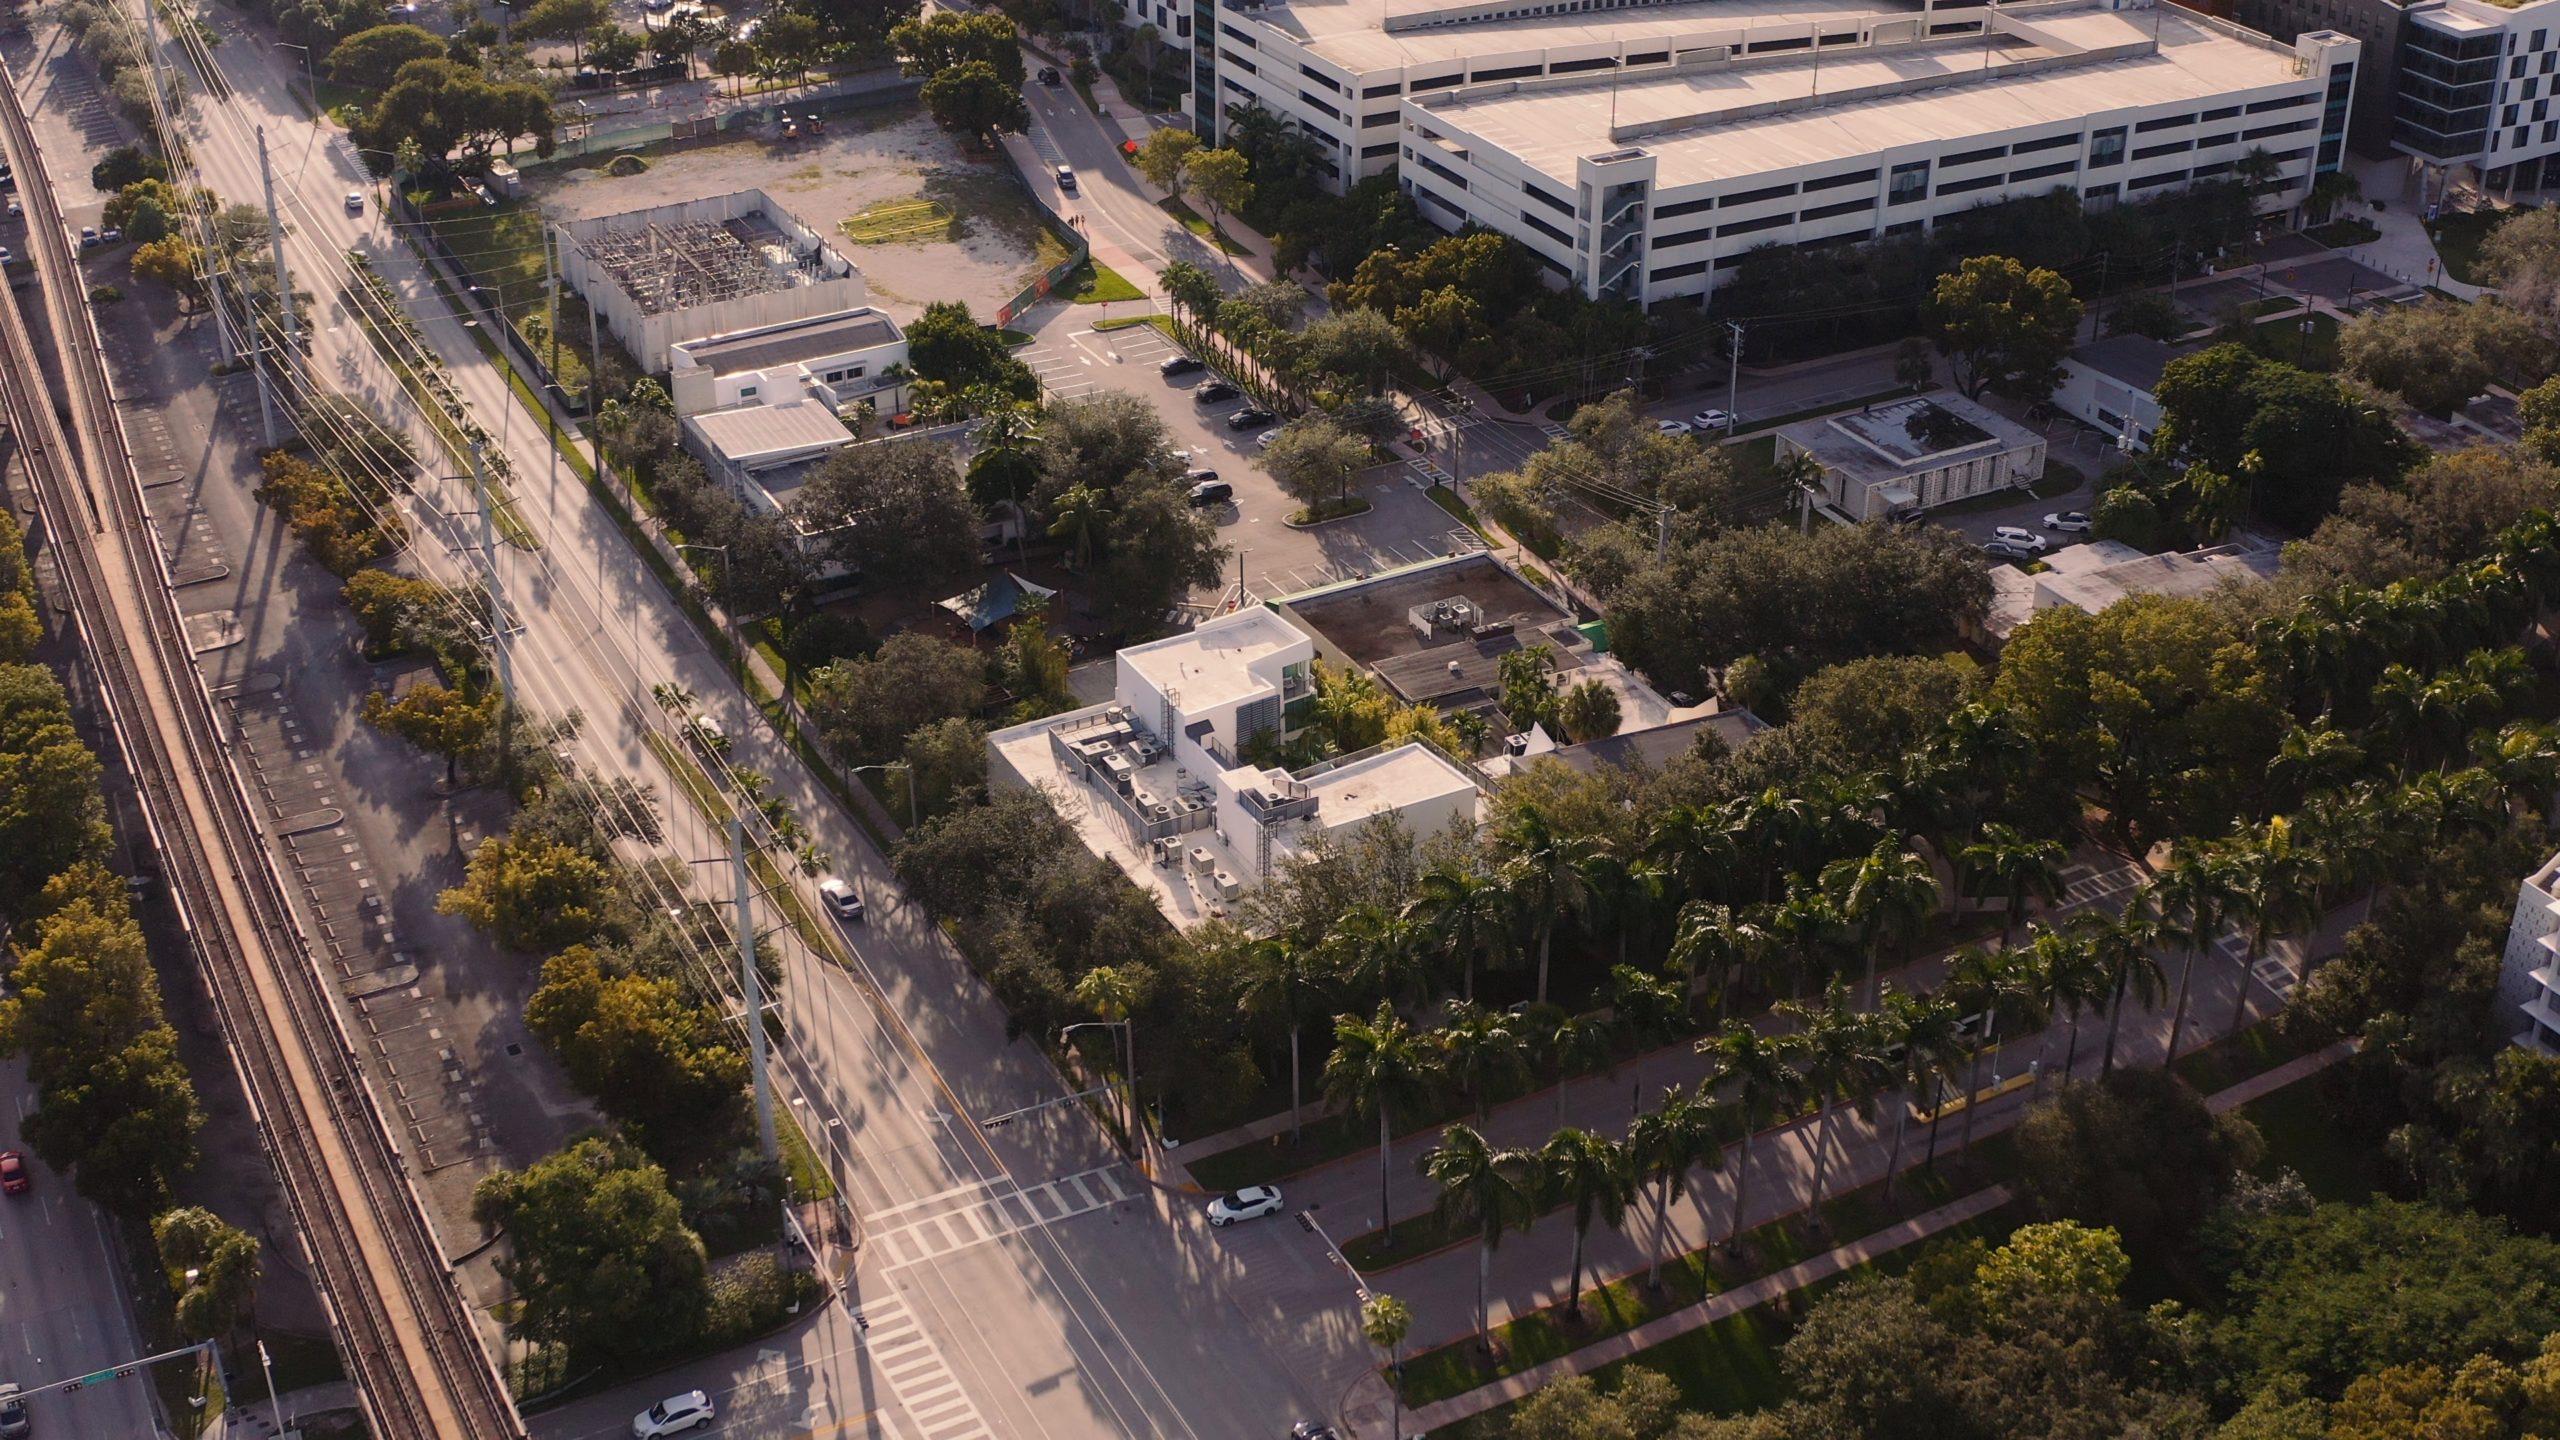 C&I Studios Aerial view of University of Miami Hillel